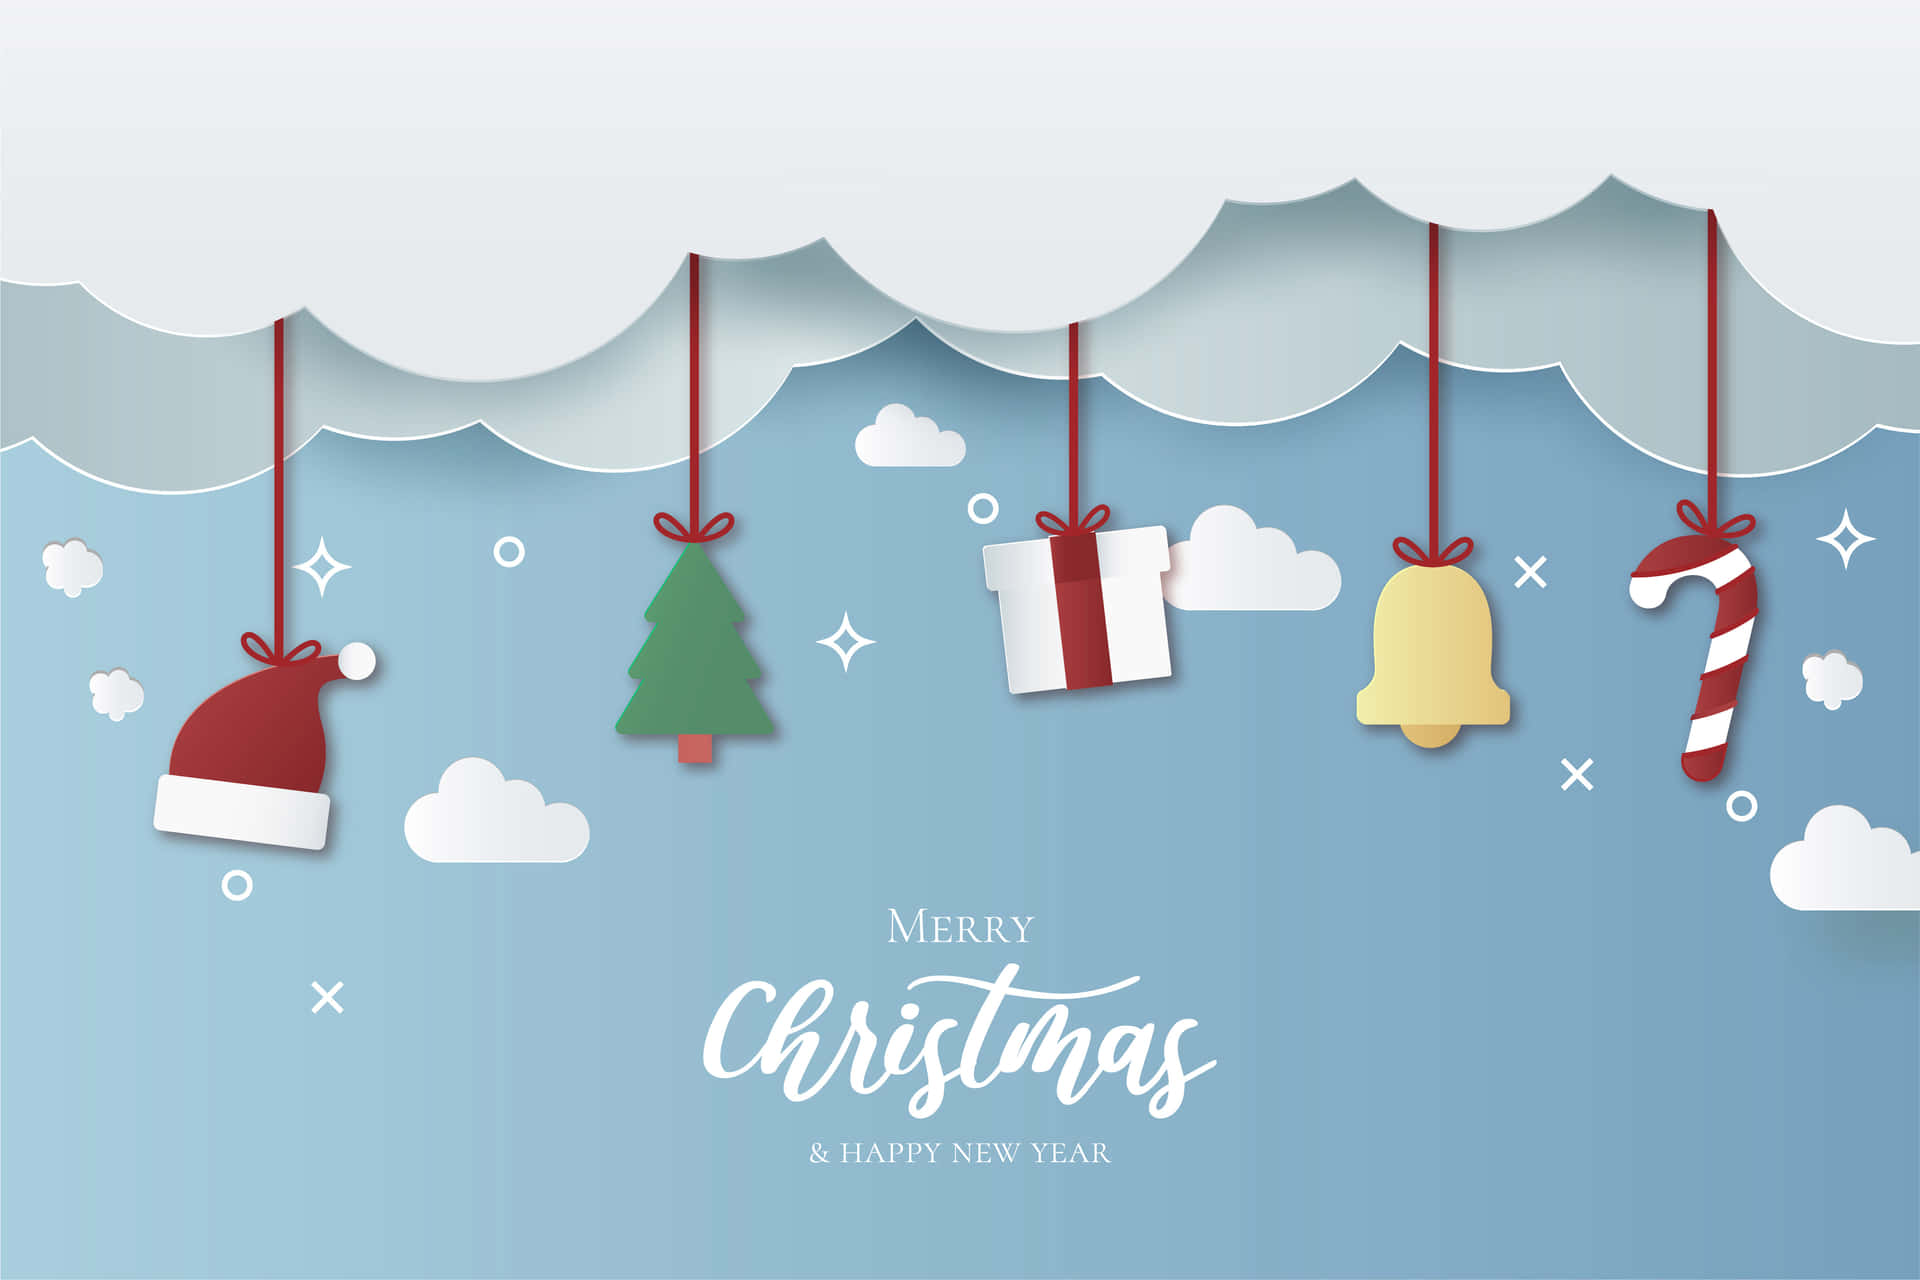 Enjoy this festive season with this cute, simple Christmas illustration. Wallpaper